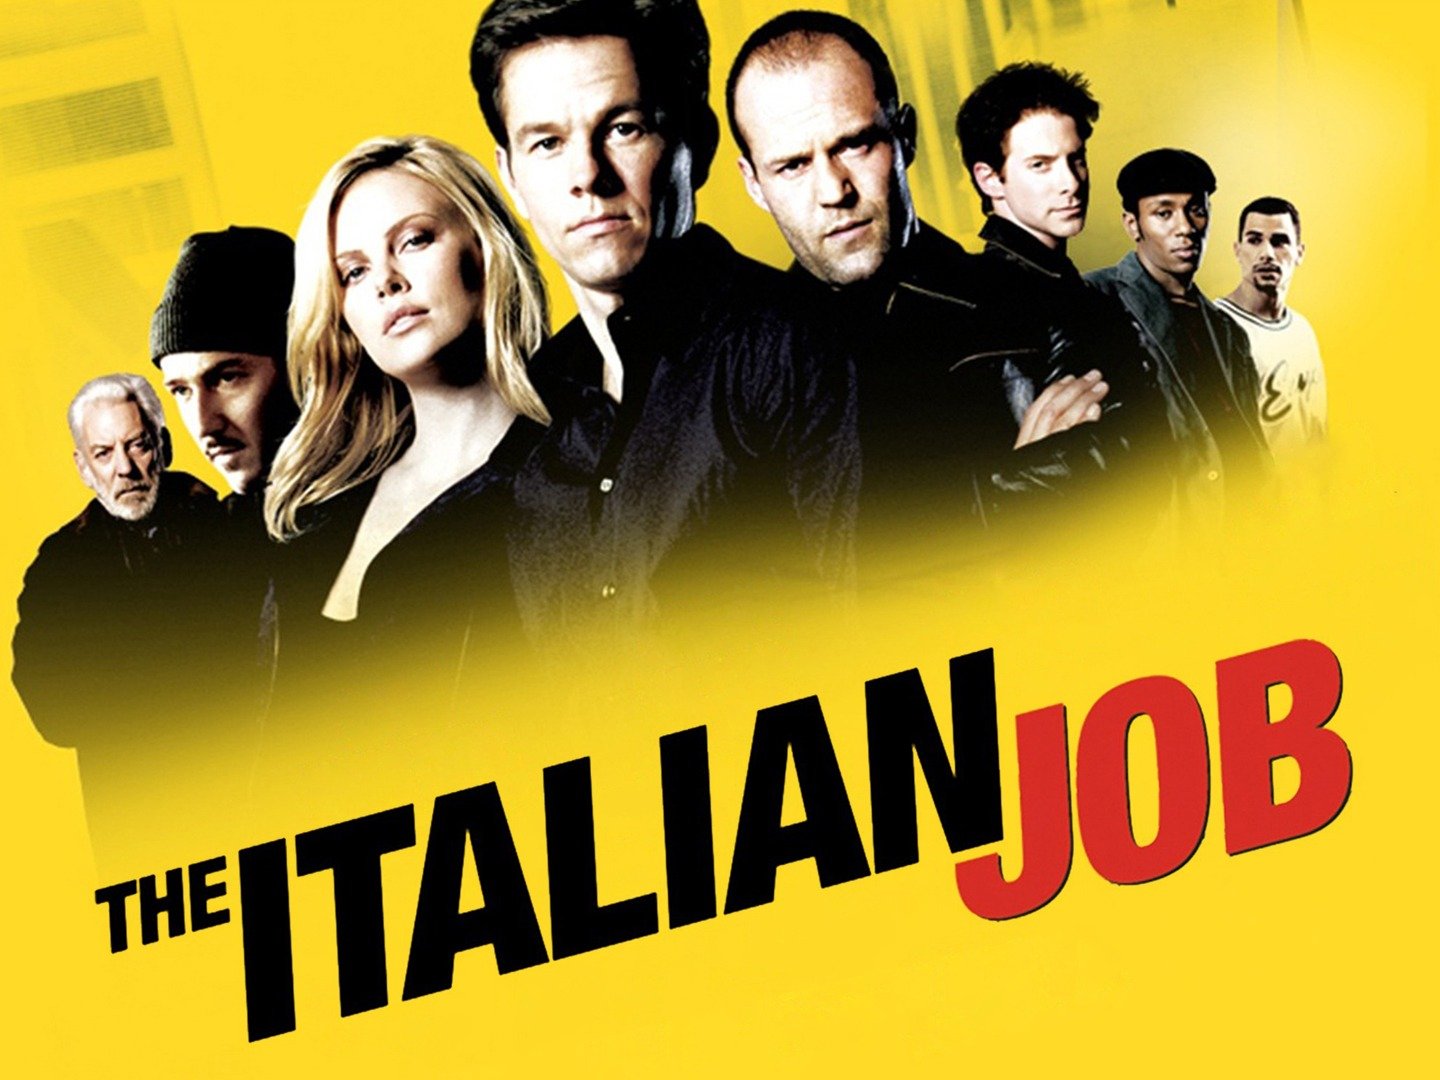 the italian job 2003 poster